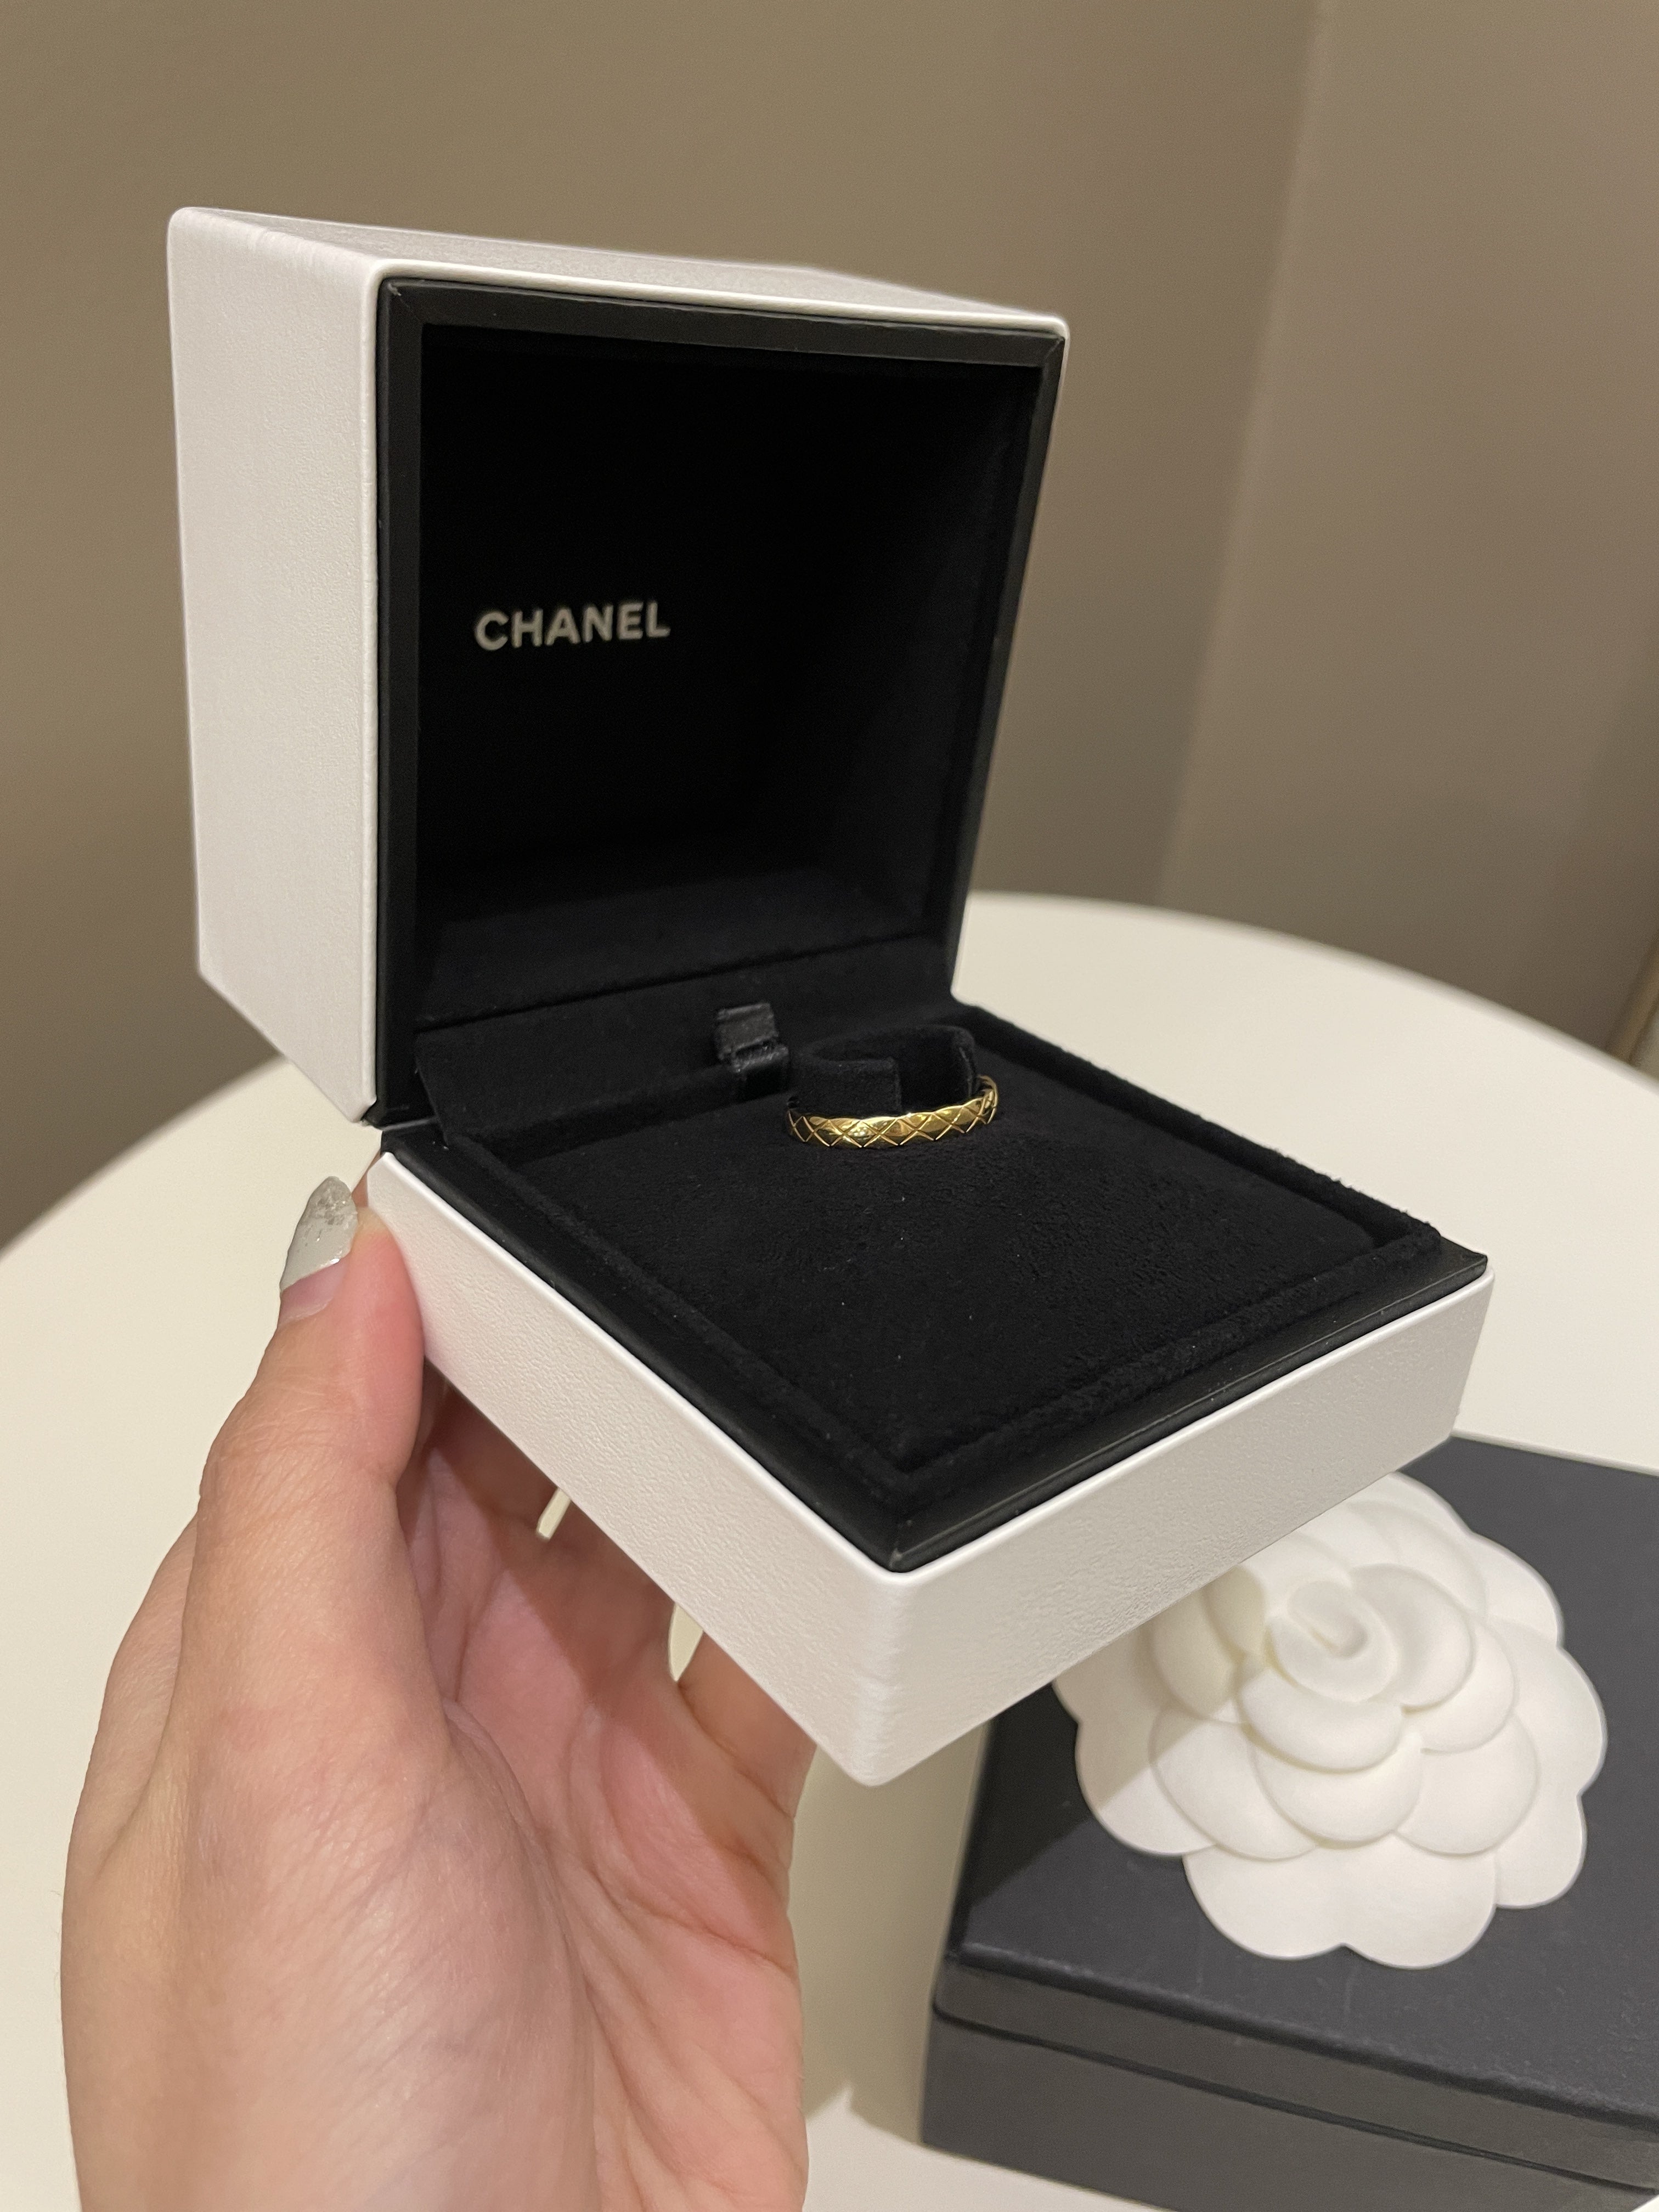 Chanel COCO Crush Ring
18K Yellow Gold